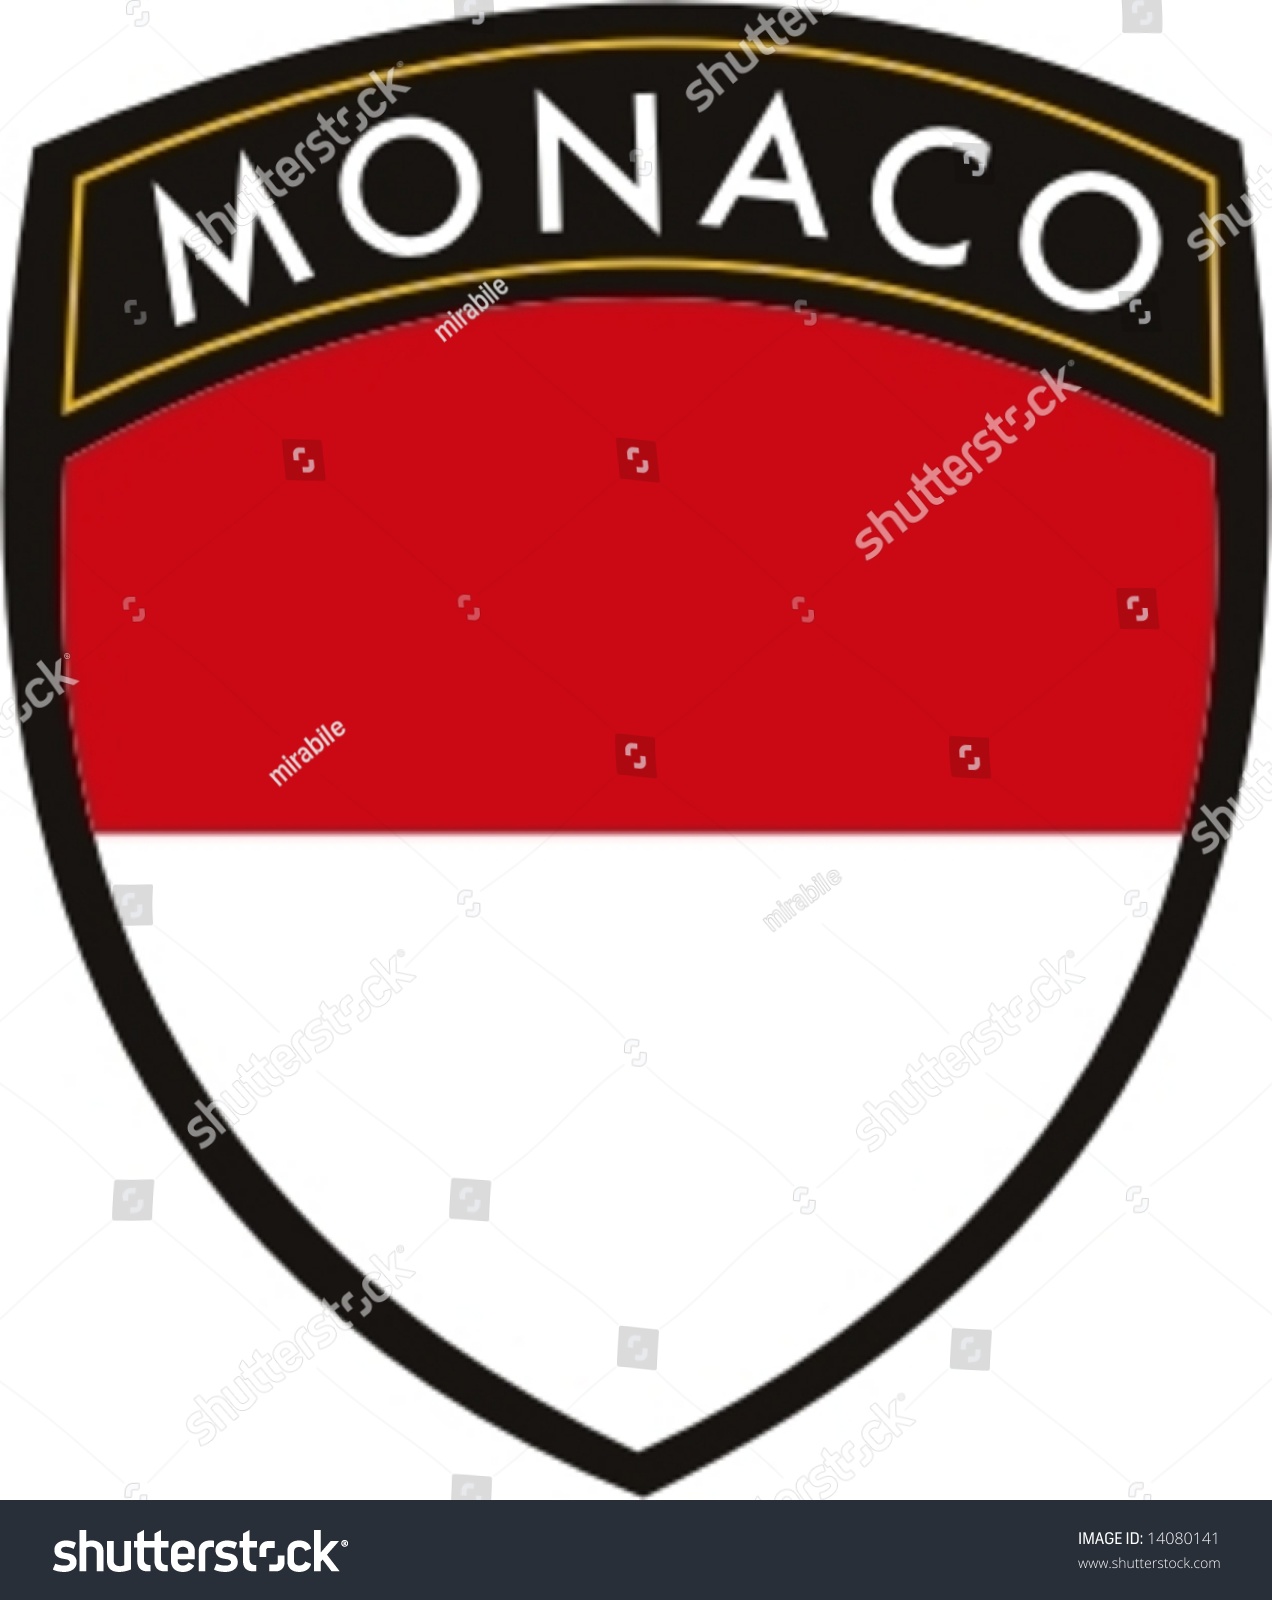 Monaco Vector Crest Flag - 14080141 : Shutterstock